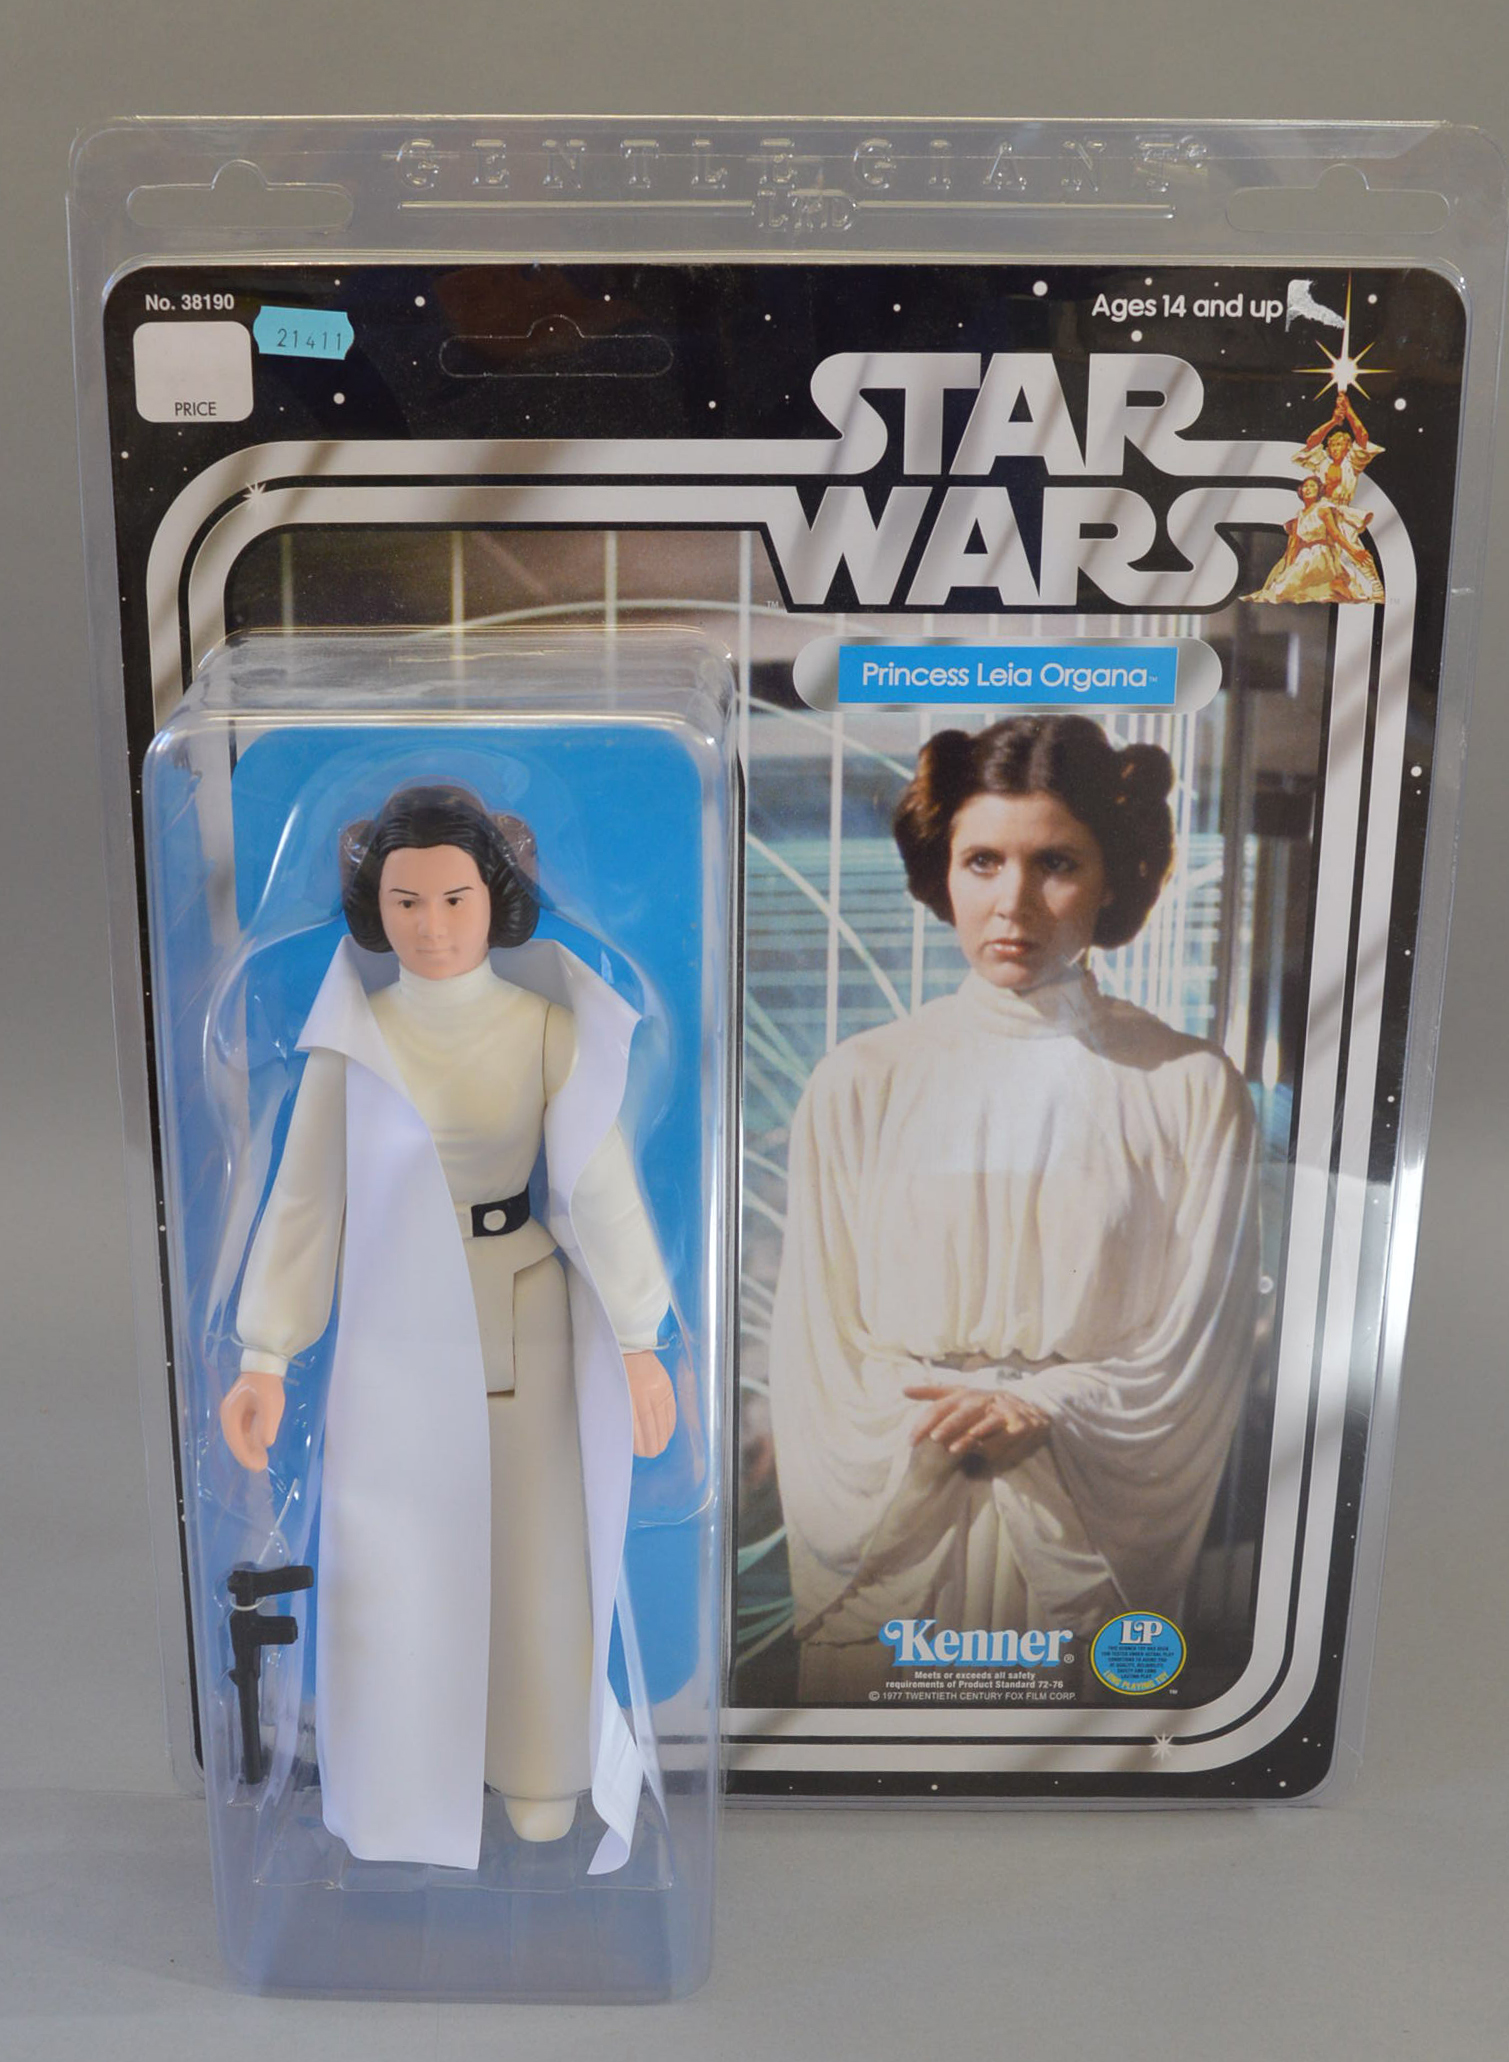 Gentle Giant Star Wars Jumbo Princess Leia Organa. E in box.